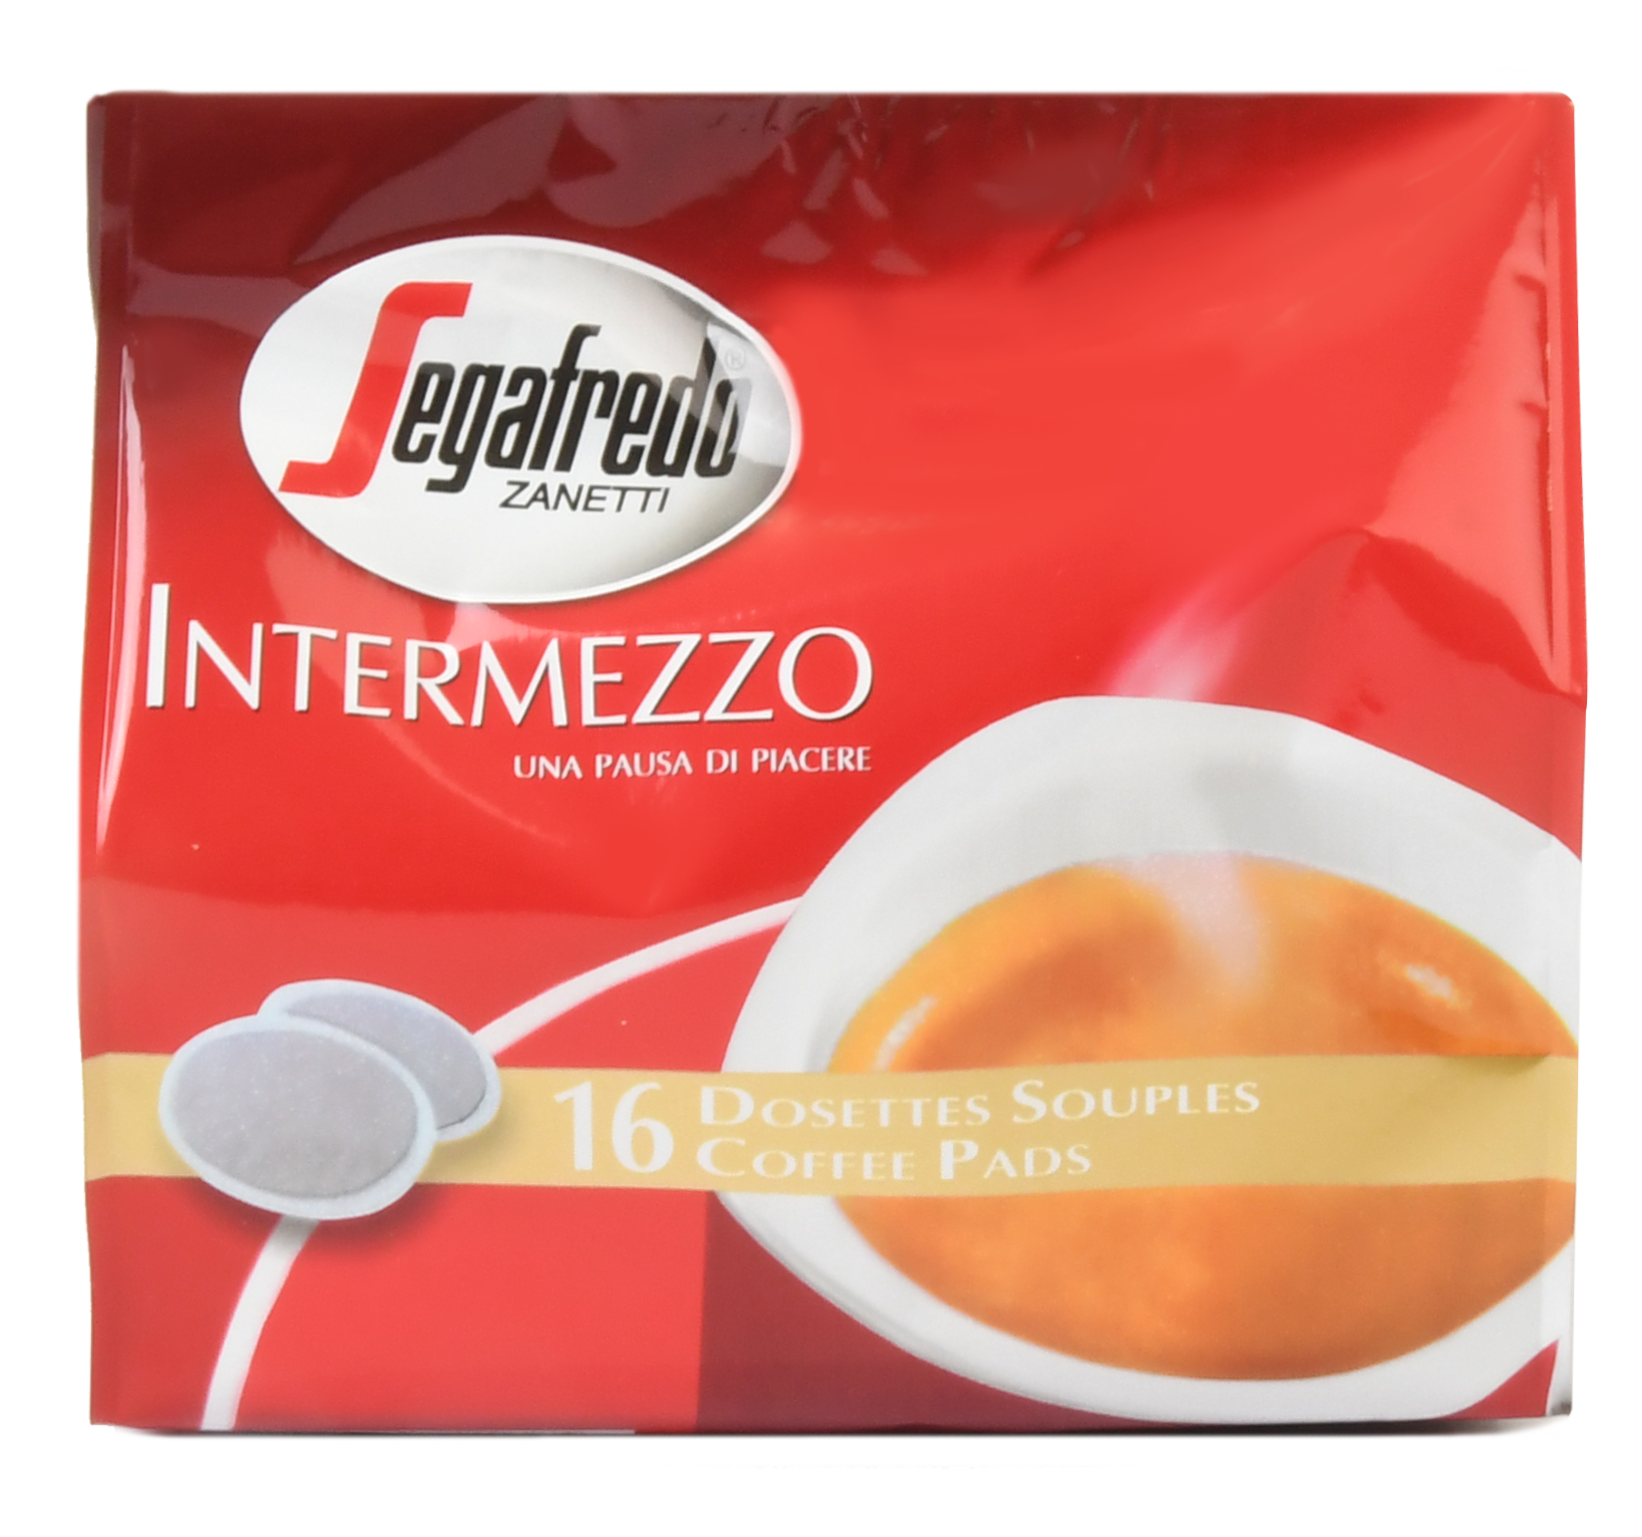 Segafredo Intermezzo coffee pads